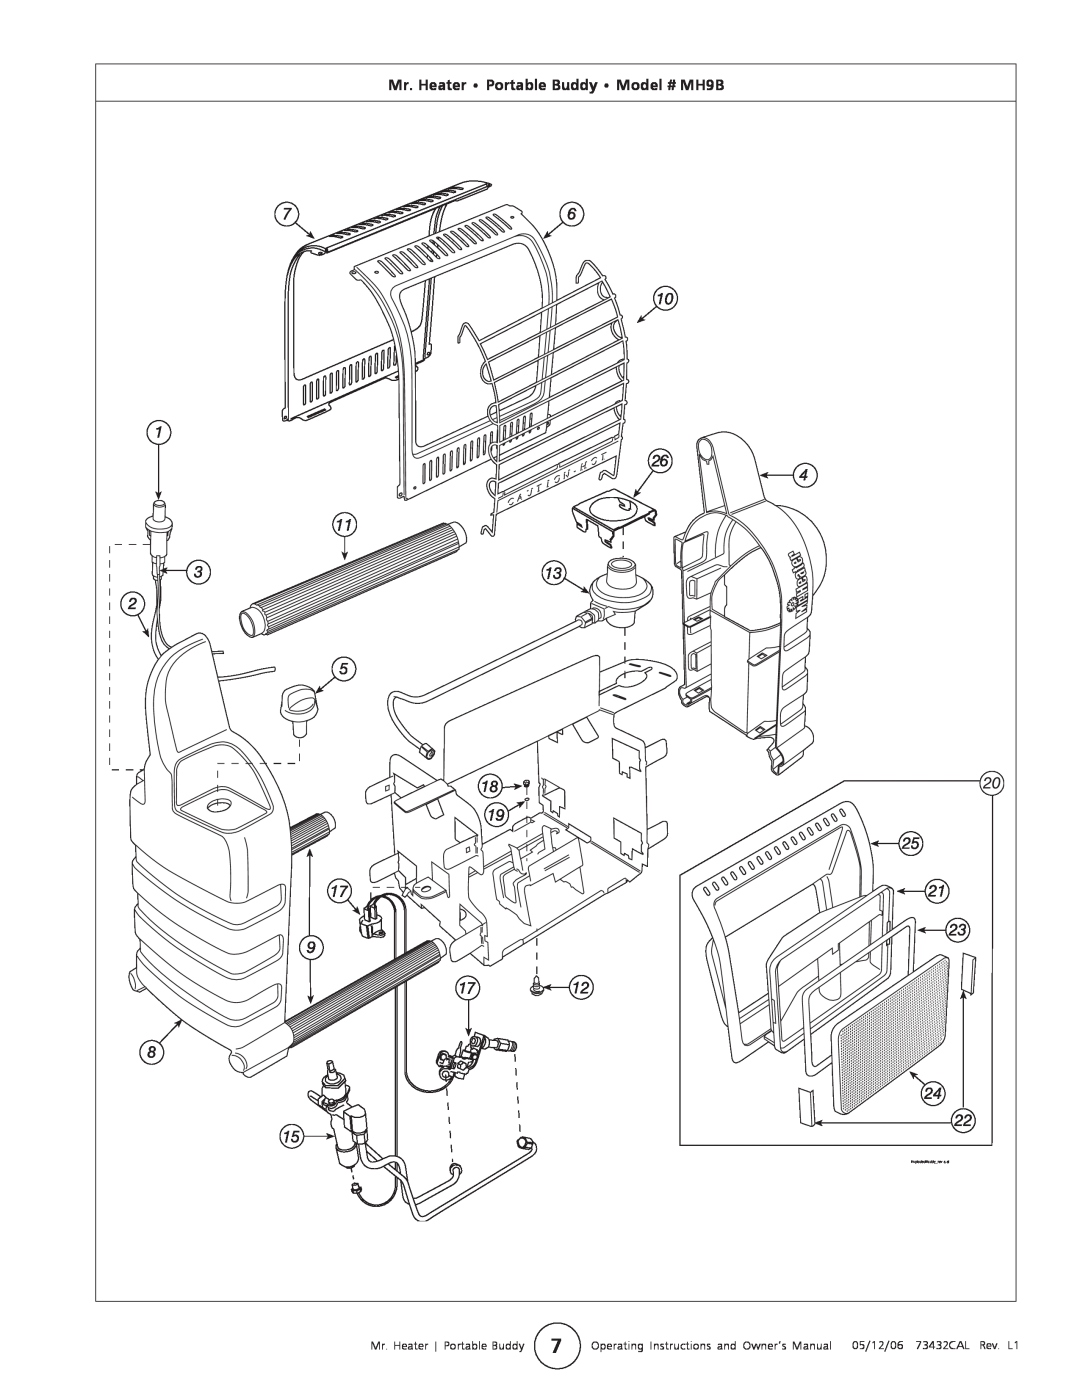 Mr. Heater owner manual Mr. Heater Portable Buddy Model # MH9B, ExplodedBuddy rev a.ai 